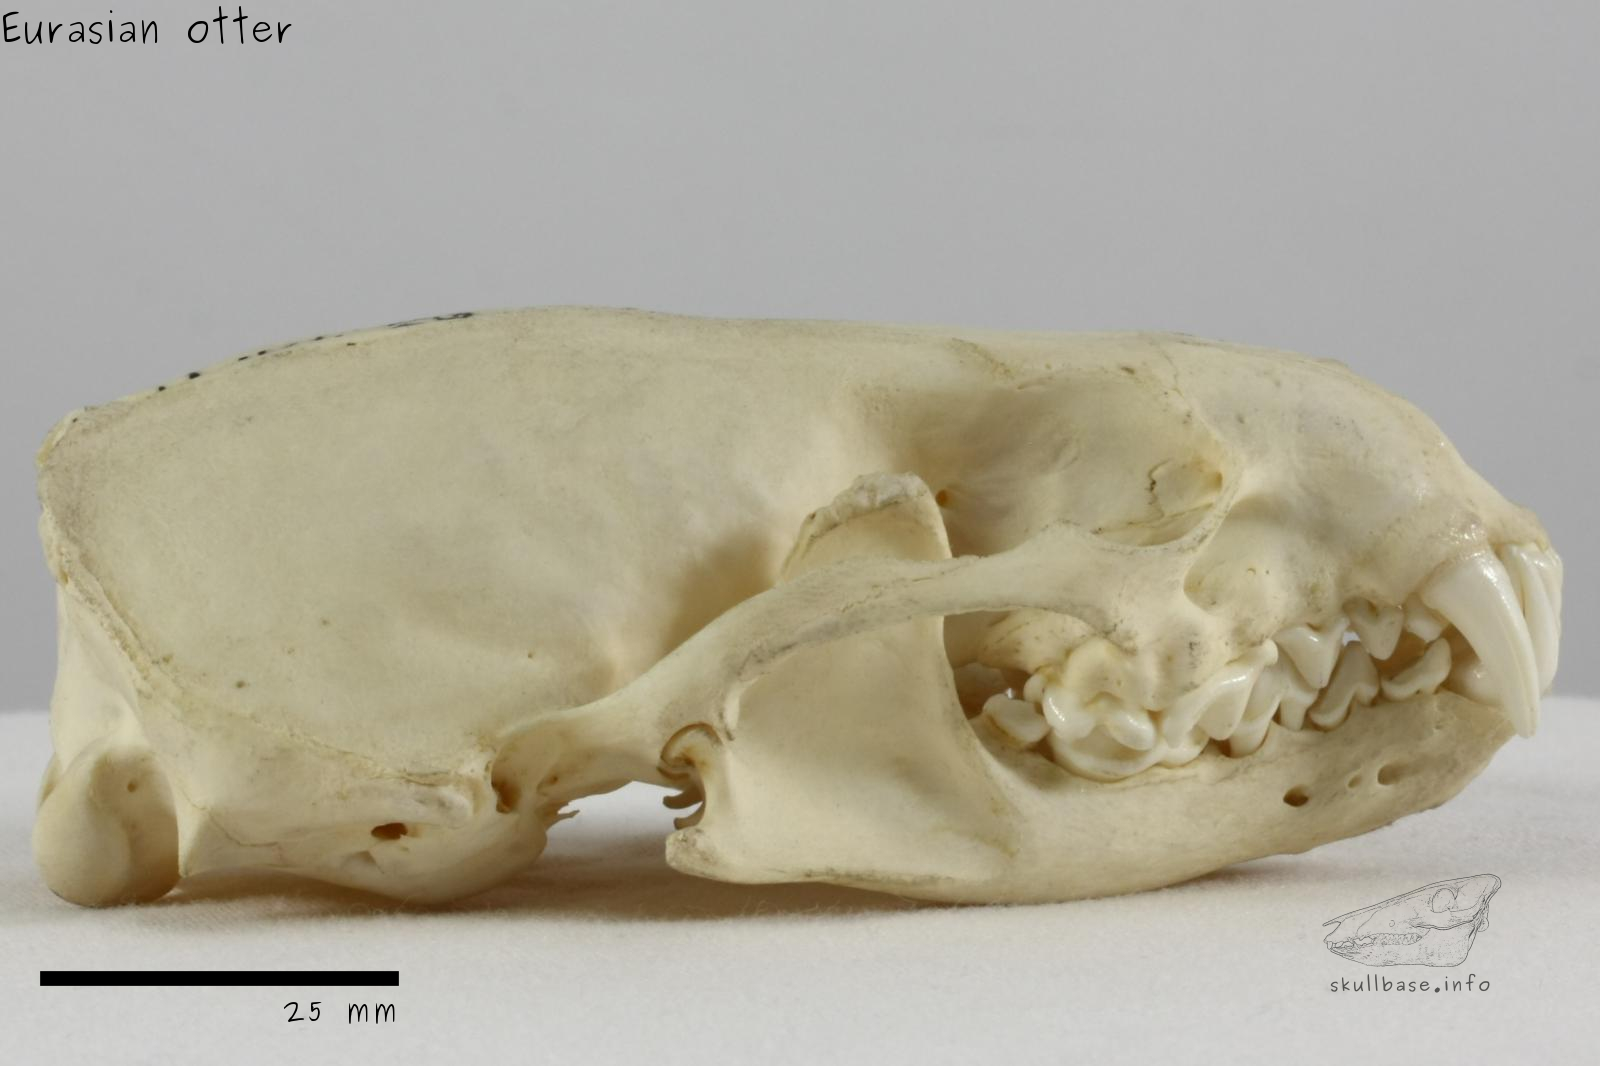 Eurasian otter (Lutra lutra) skull lateral view